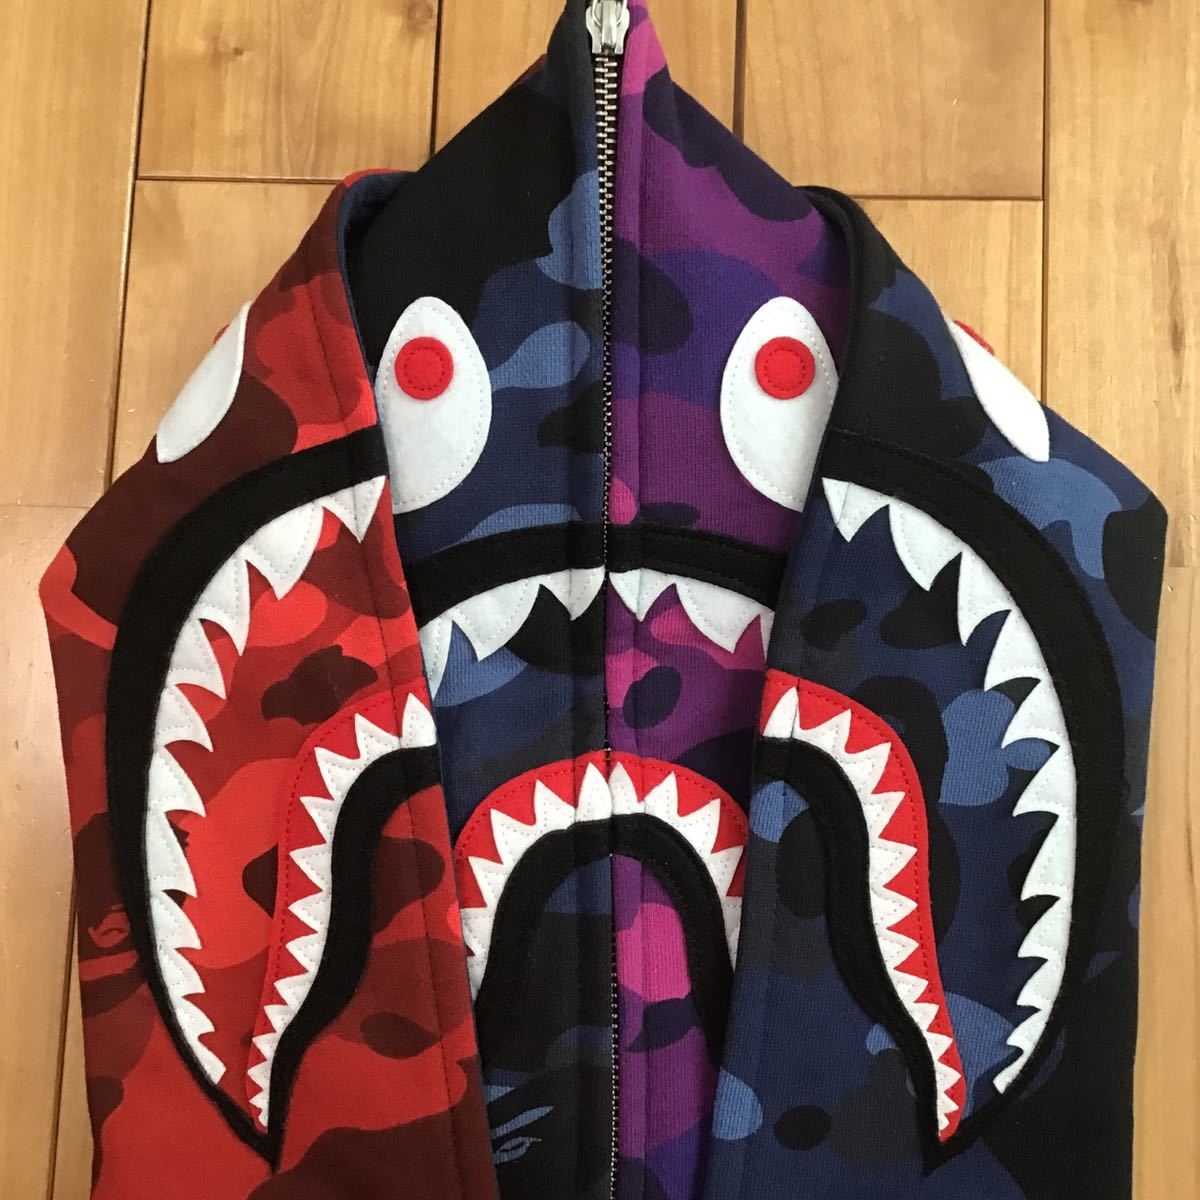 Crazy camo ダブル シャーク パーカー Lサイズ double shark full zip hoodie a bathing ape BAPE エイプ ベイプ 迷彩 sa31_画像3